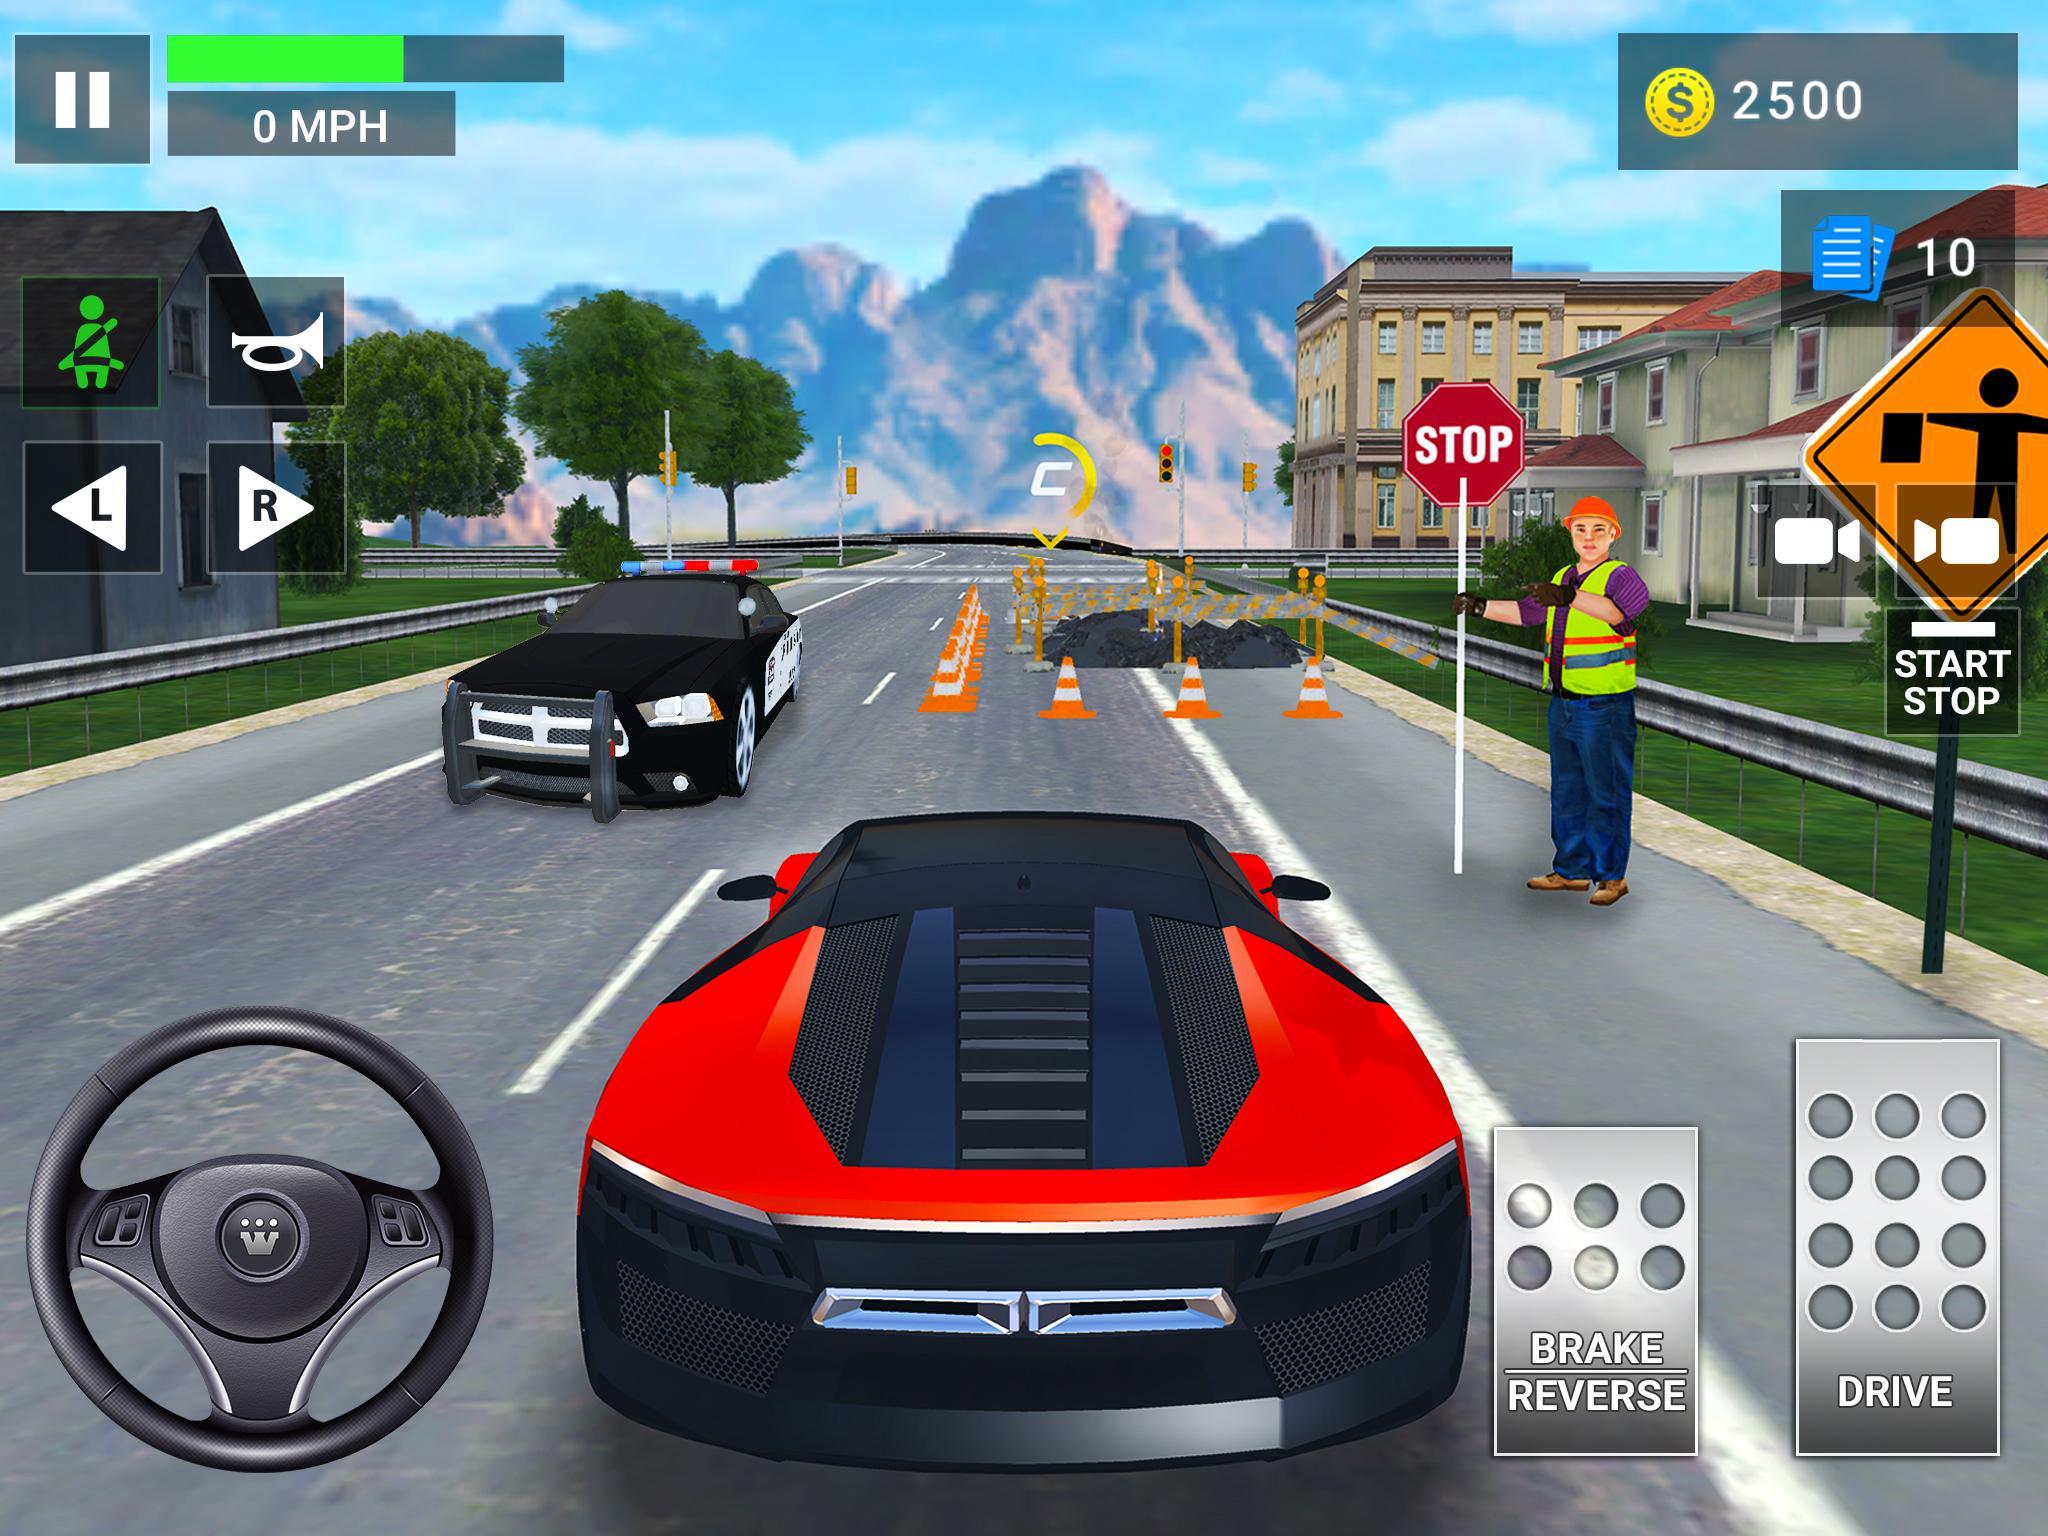 Driving Academy 2 Car Games & Driving School 2021 2.1 Screenshot 19